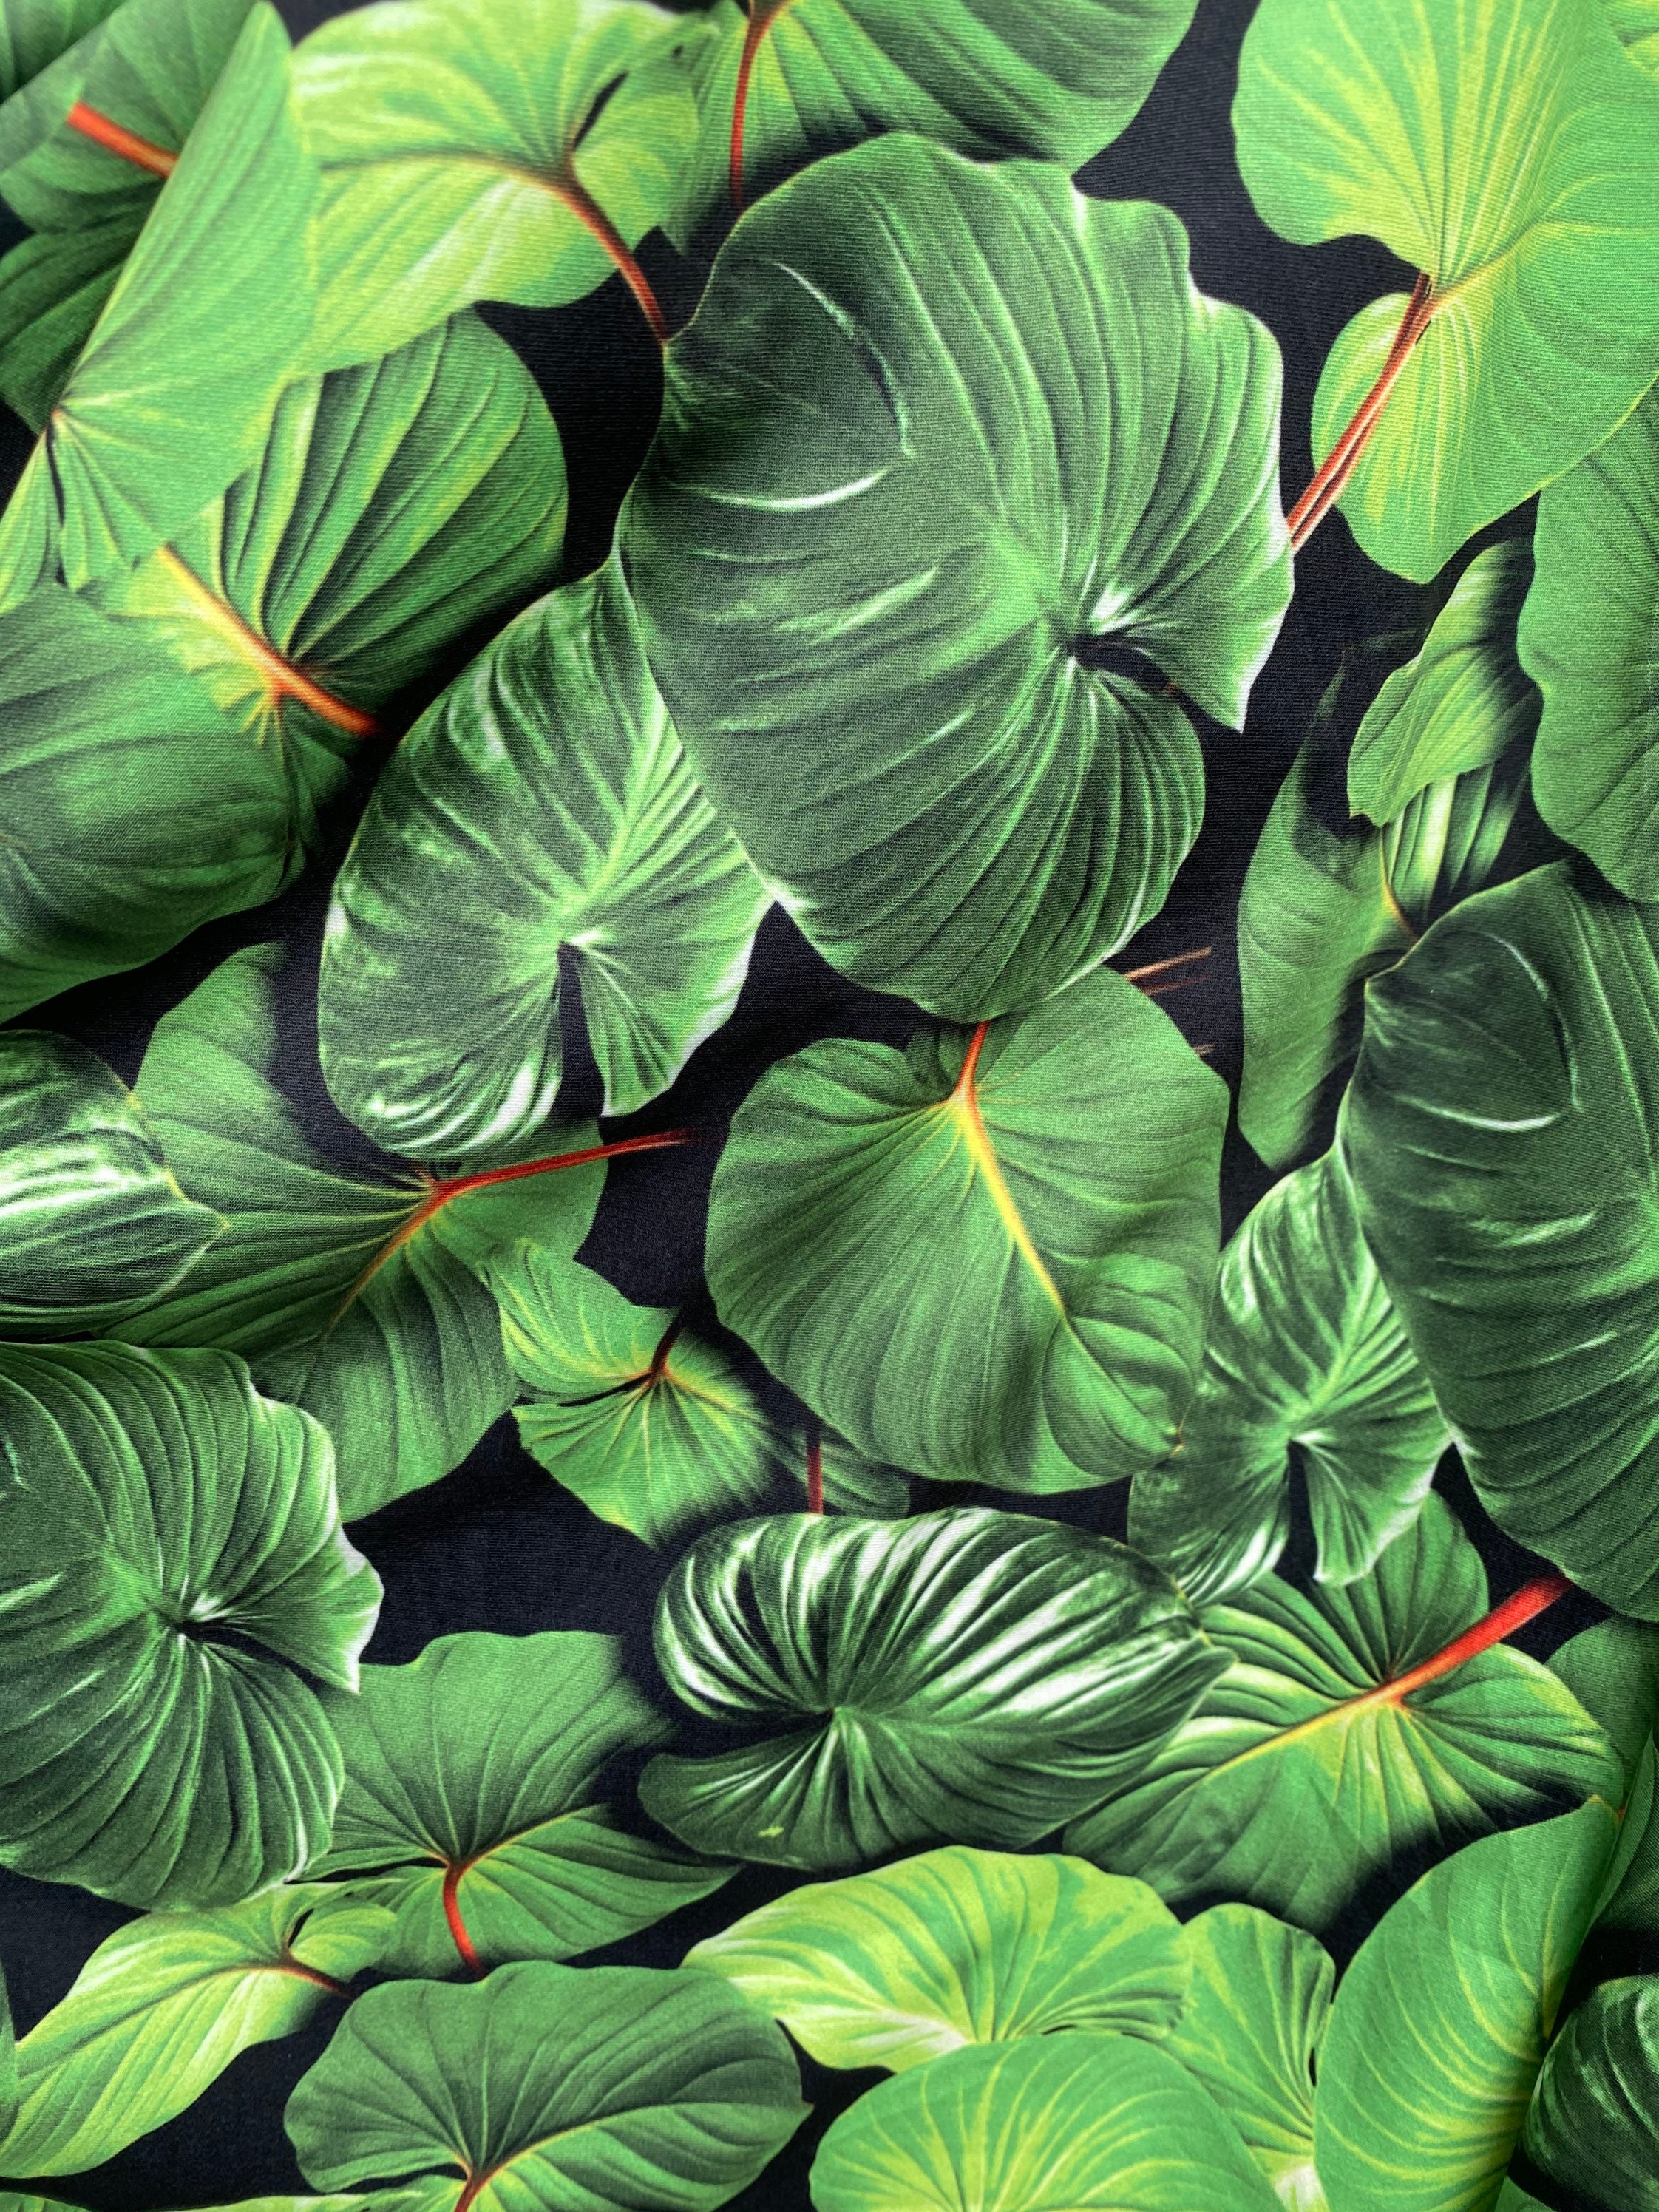 New Leaves Tropical Design Print on Nylon Spandex 4-way - Etsy